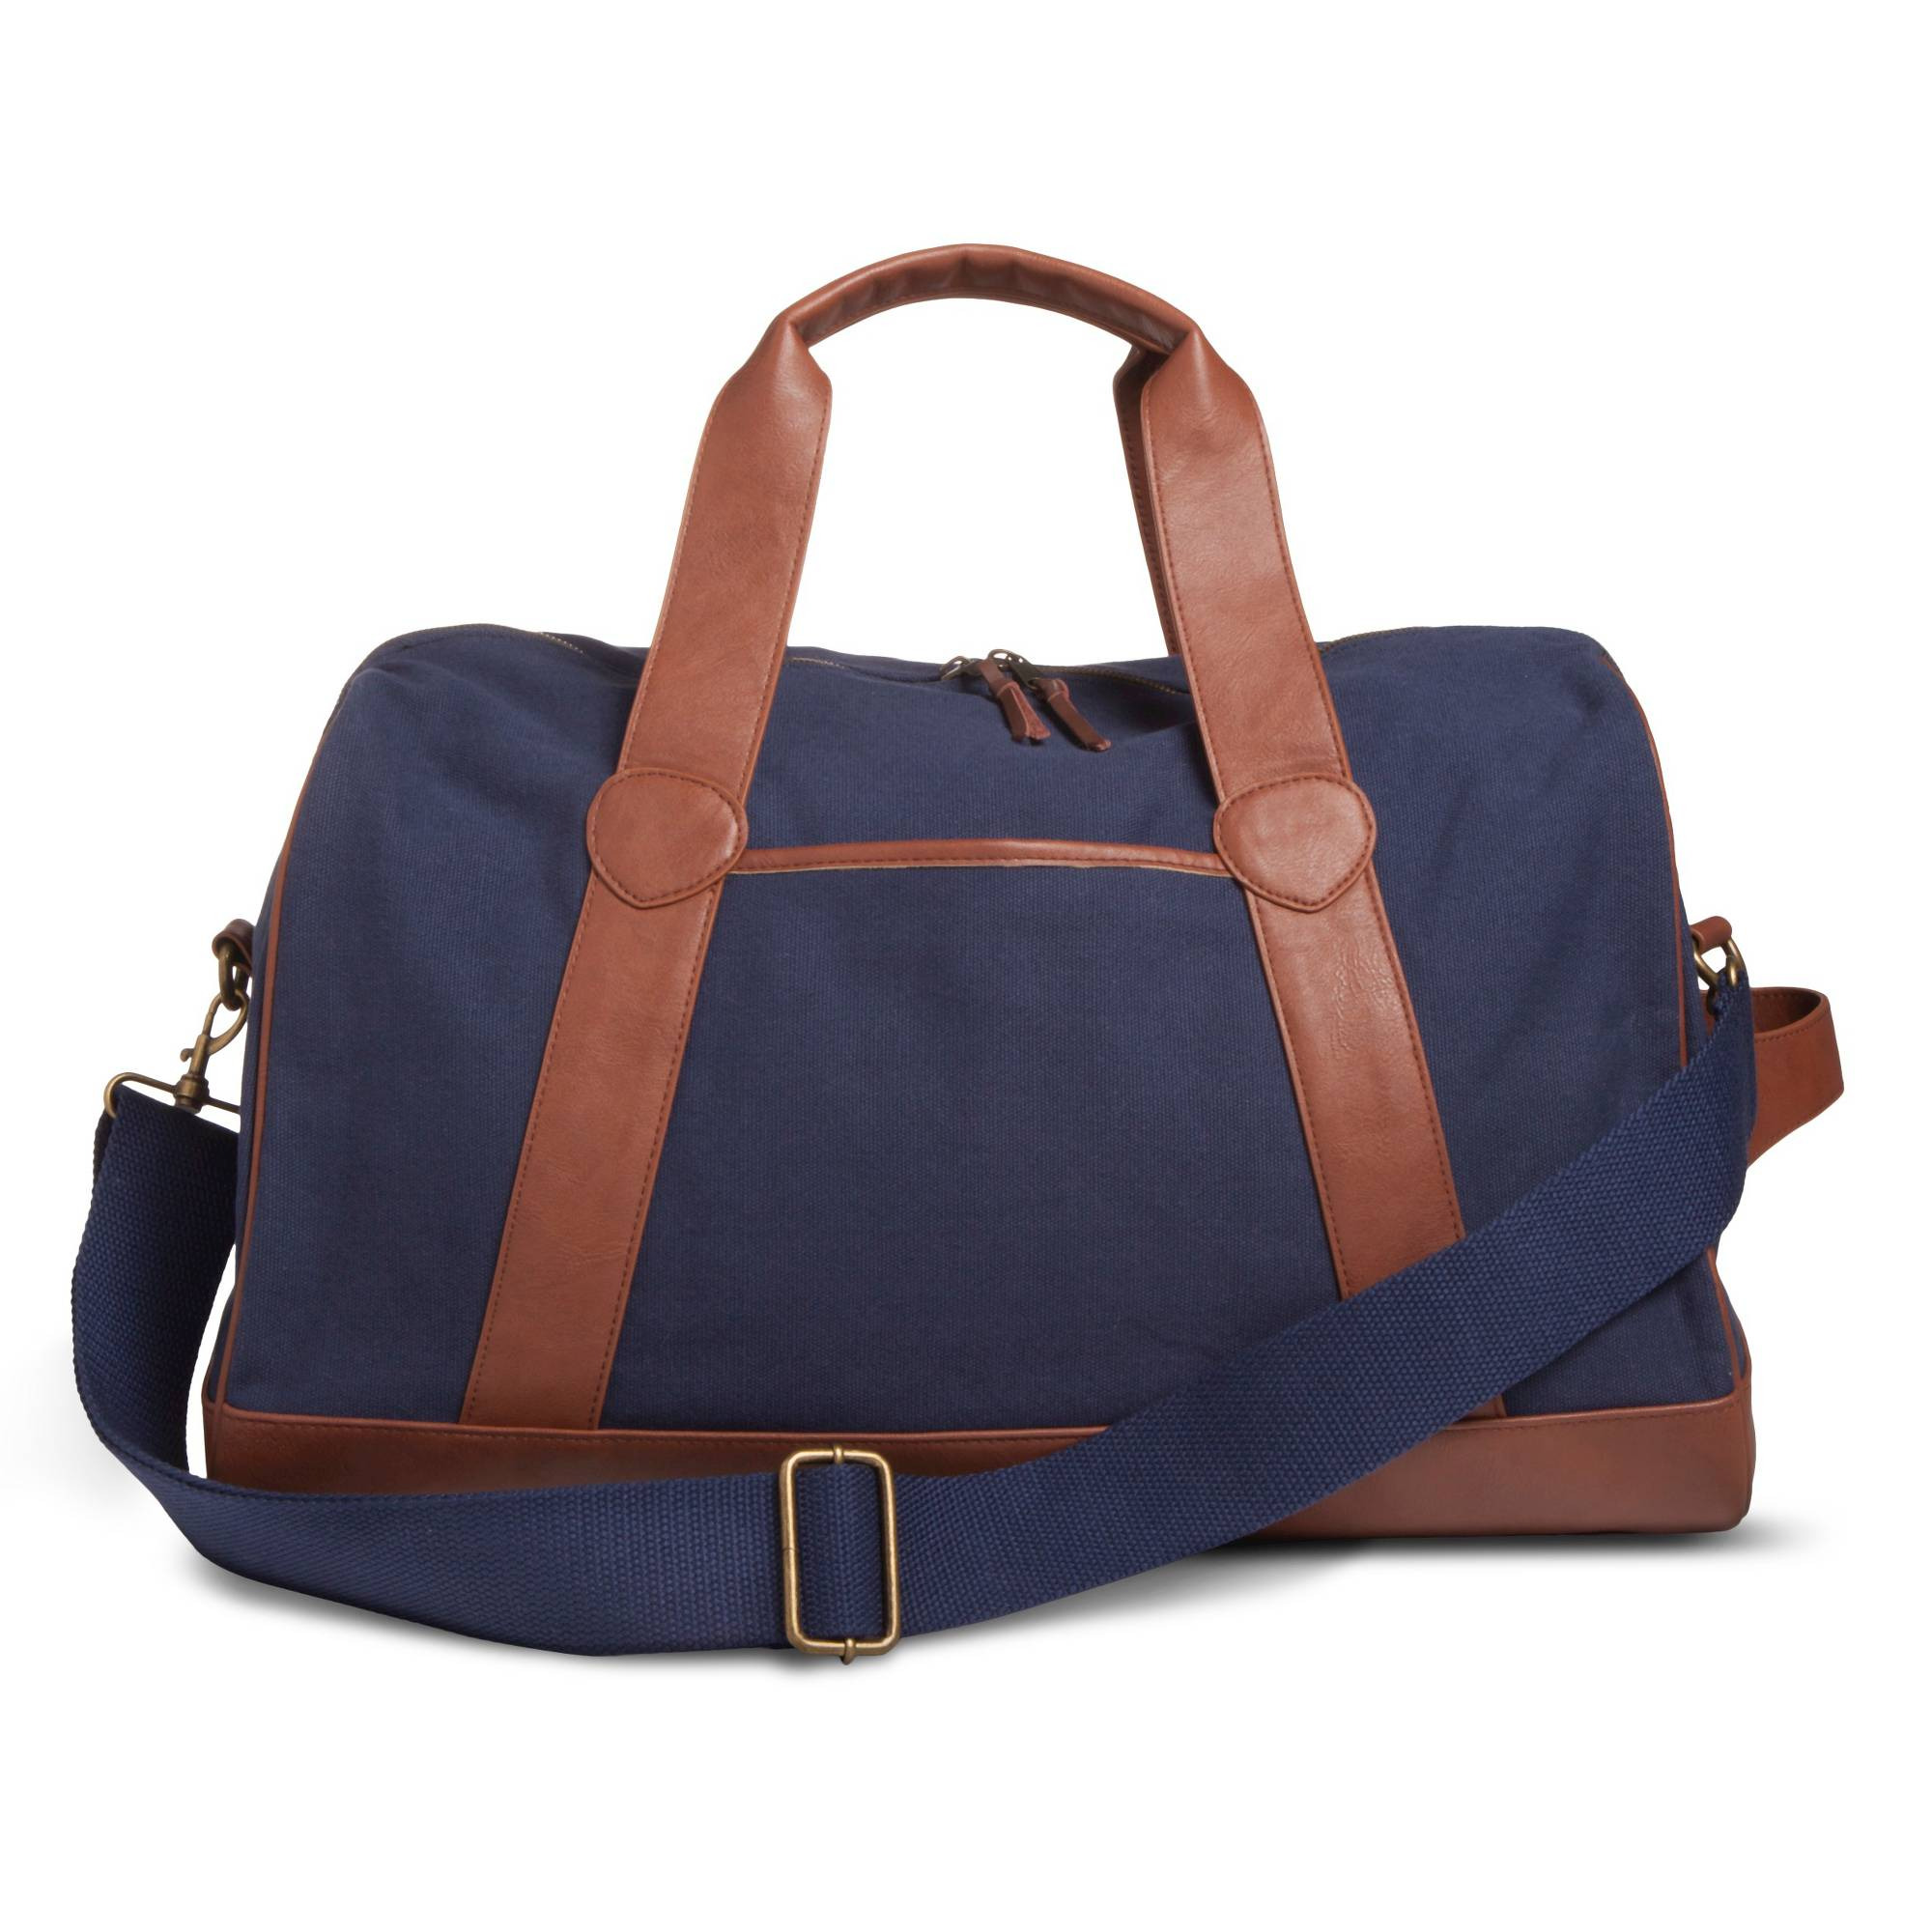 Target: Men’s Weekender Bag Navy ONLY $14.98! (Reg $29.99)